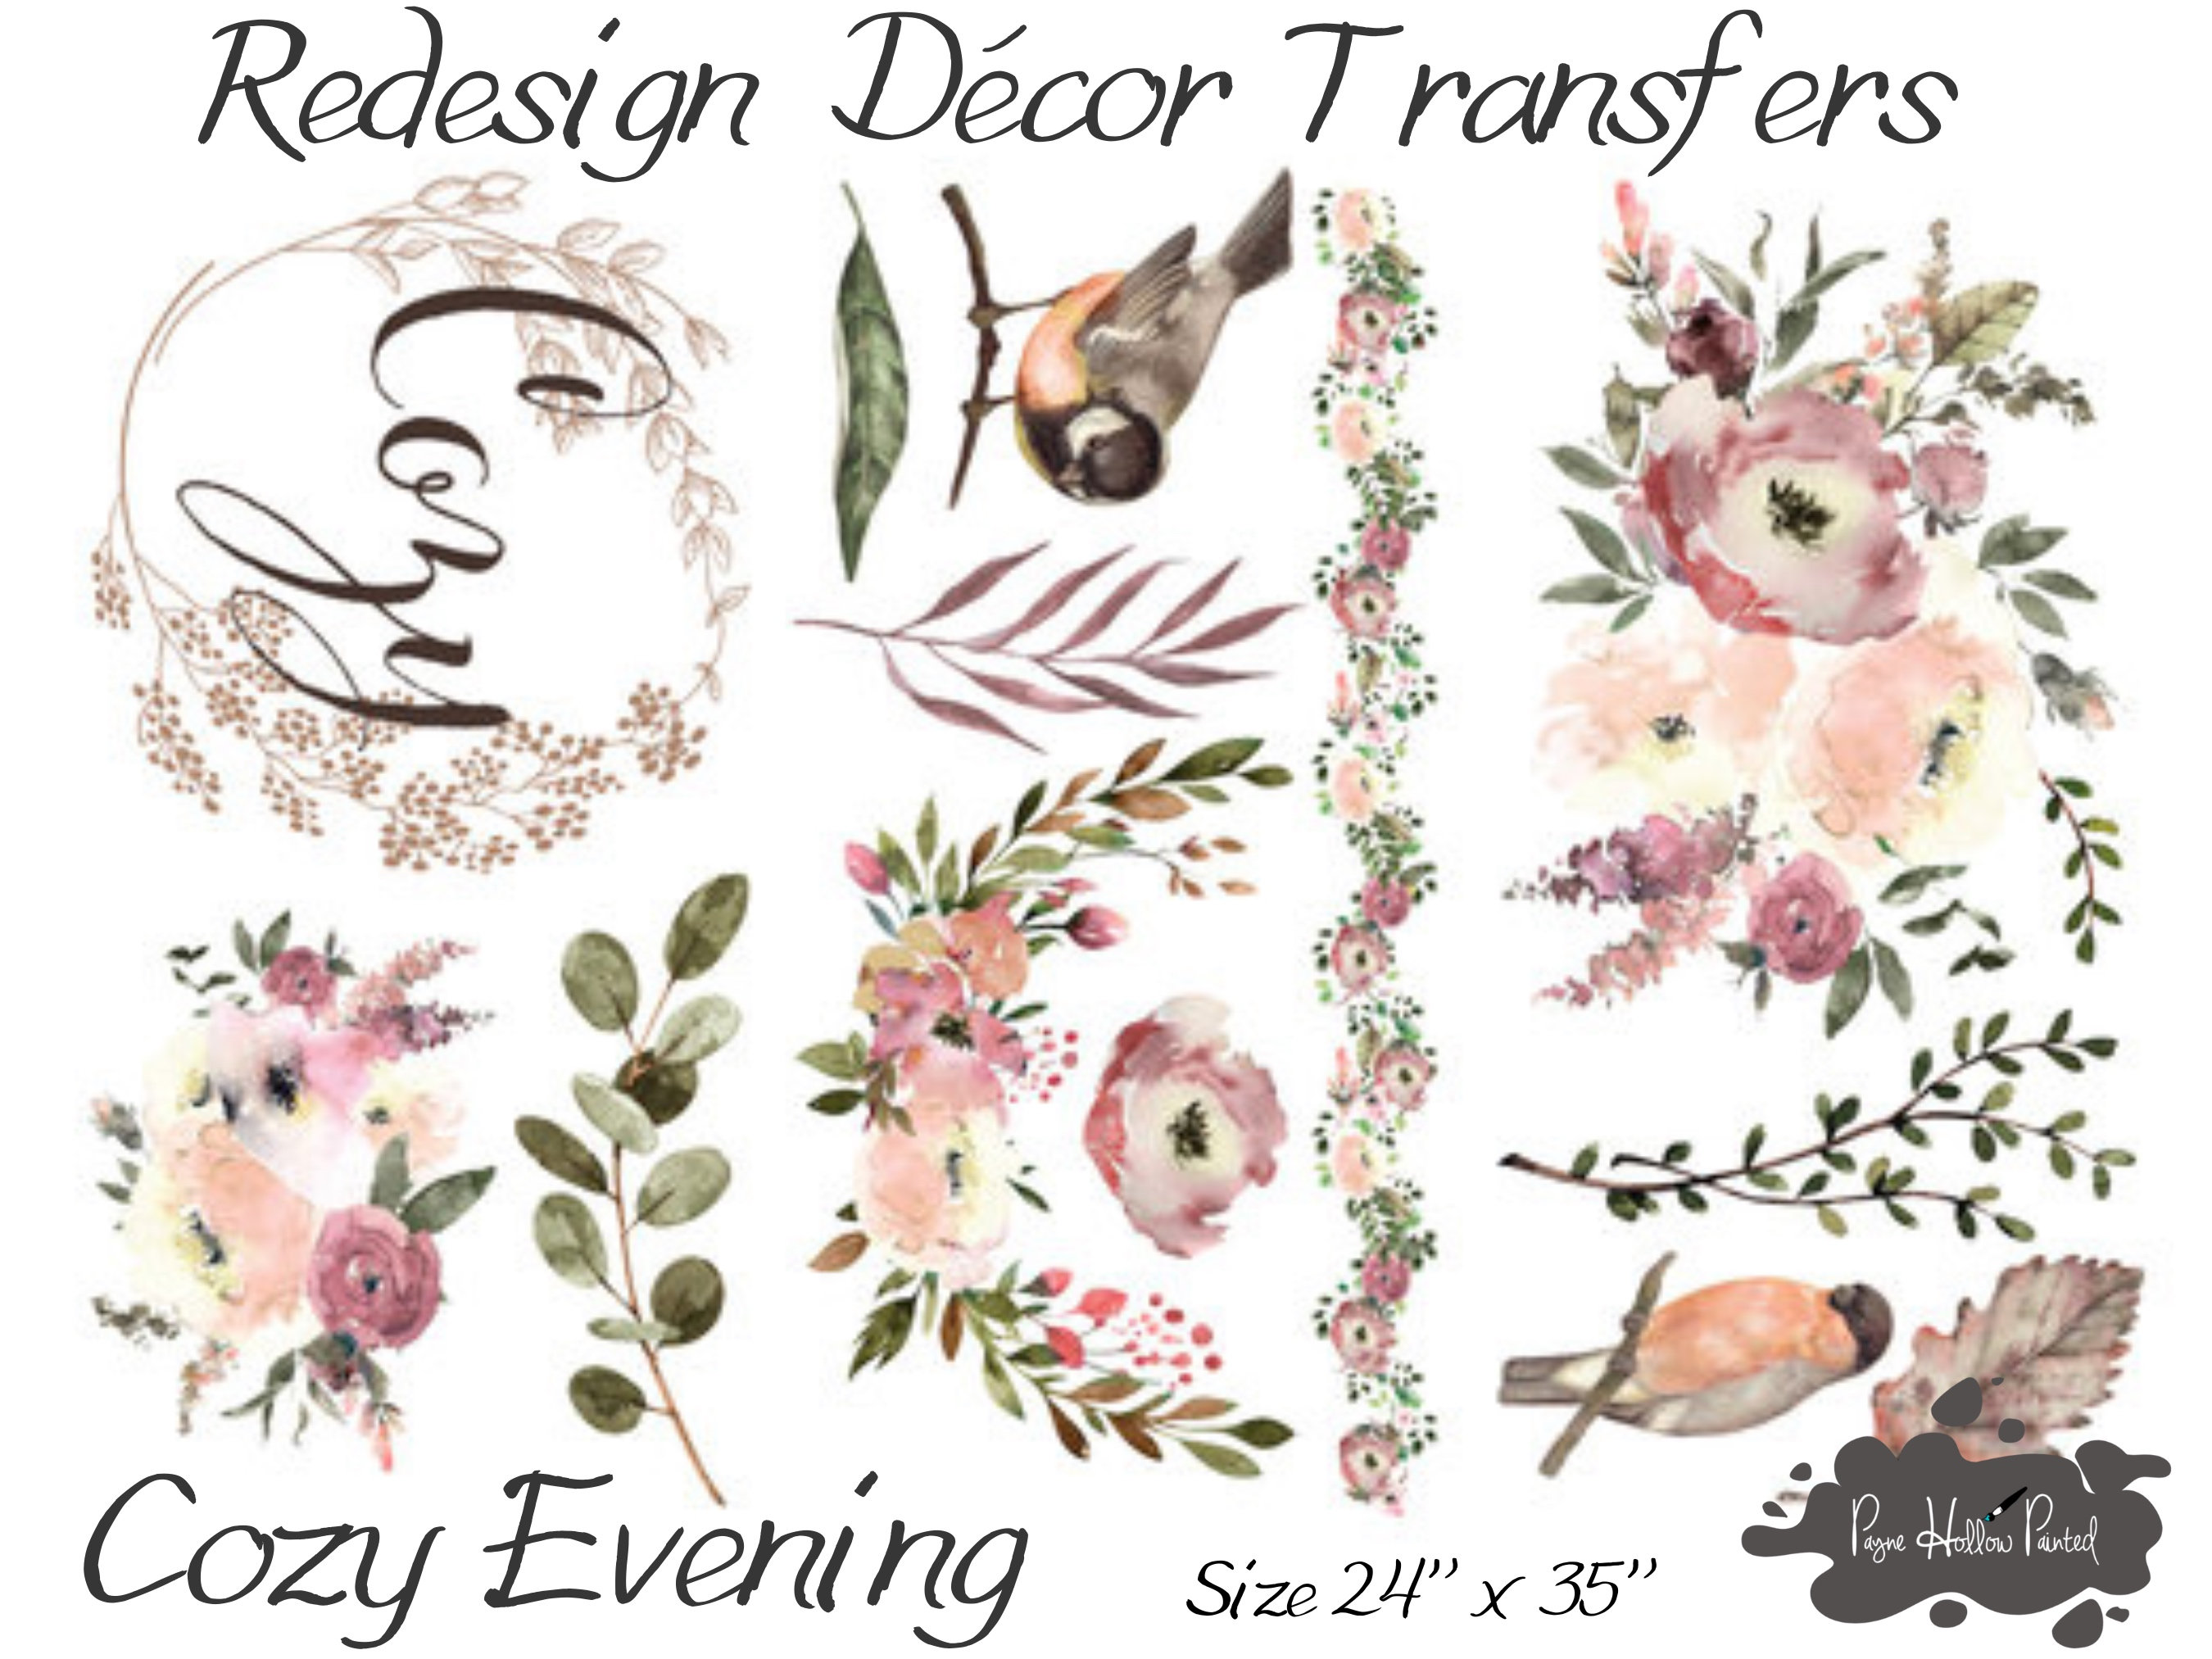 Decor Transfer| Redesign with Prima| Cozy Evening